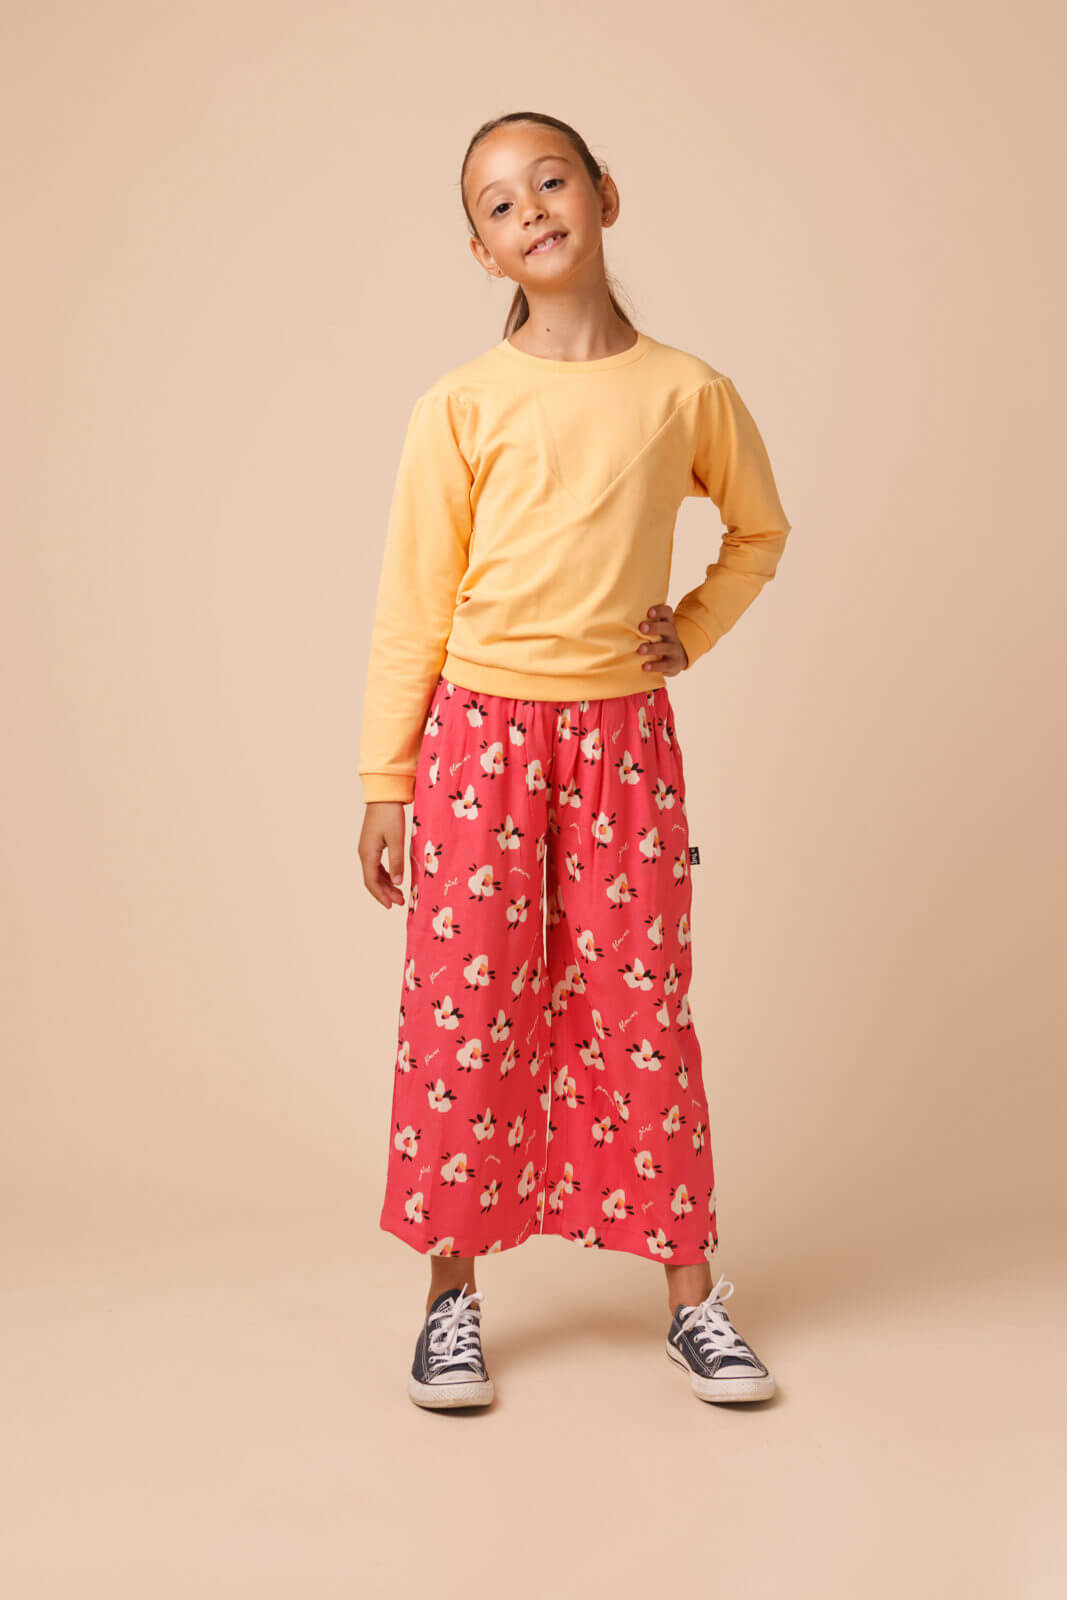 Beangstigend uit vervolging sweater Little Miss Juliette Geel/oranje (Meisjes, Sweaters/Longsleeves ) -  Kleurig4kids